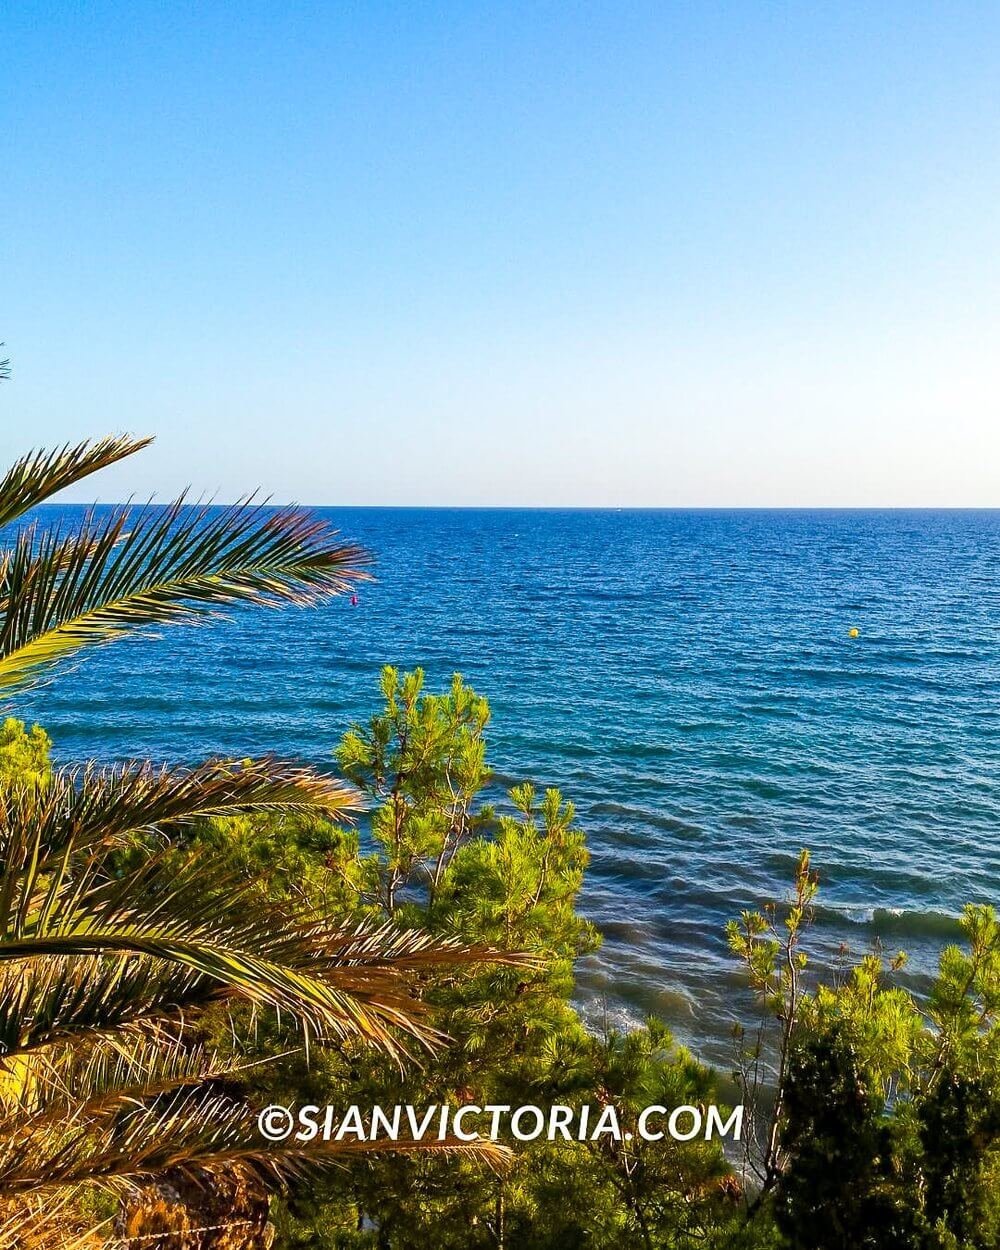 sian-victoria-salou-spain-tourist-sightseeing-attractions-beach-sea-viewpoints-Catalonia-travel-costa-dorada-plants-palm-trees-sea-beach-ocean-coastline.jpg